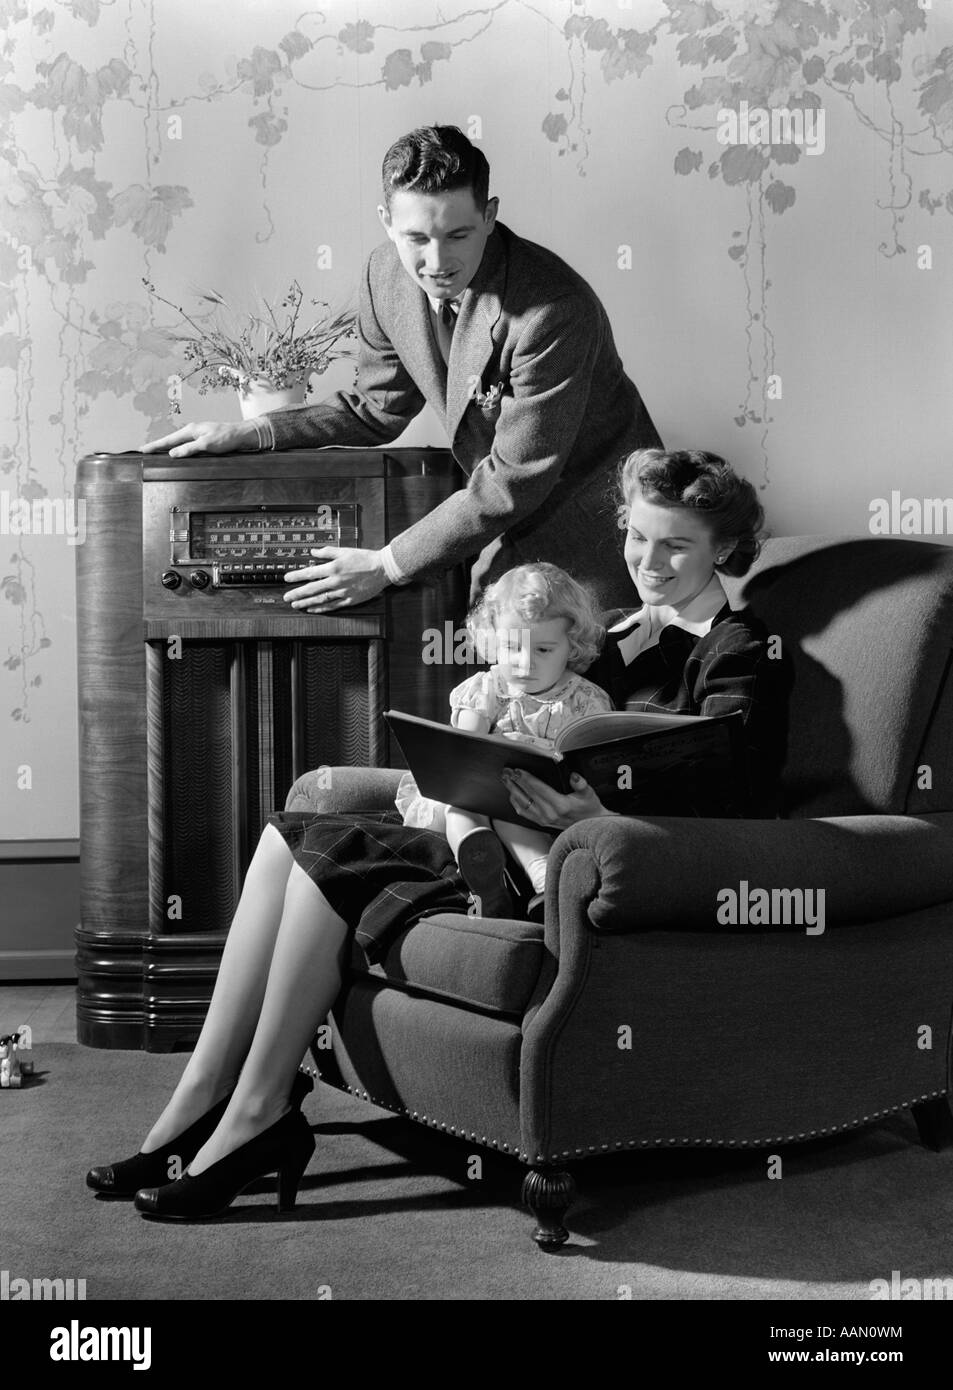 Family radio listening Black and White Stock Photos & Images - Alamy